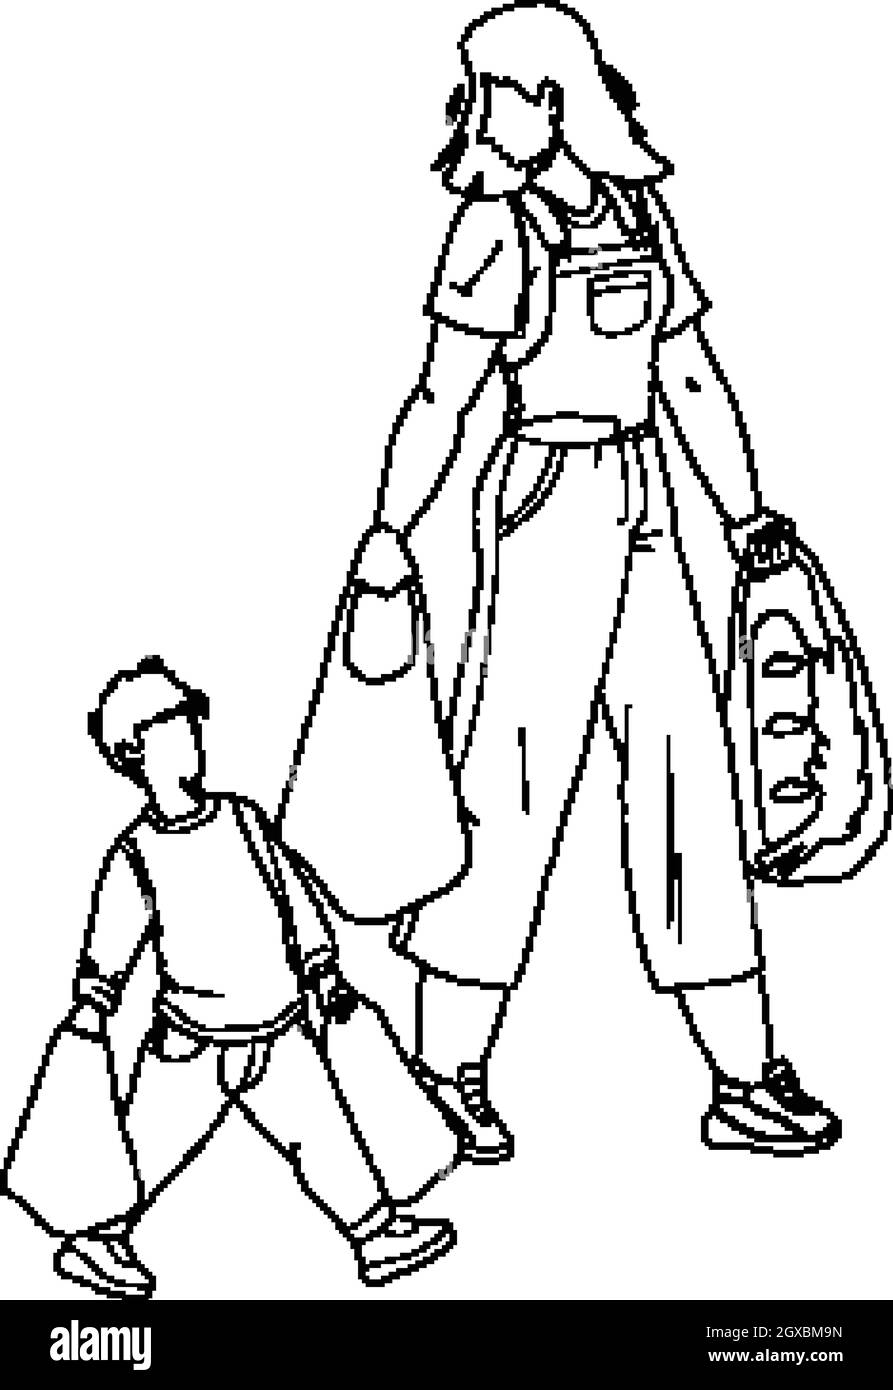 Children Etiquette Help To Adult Carry Bags Vector Stock Vector